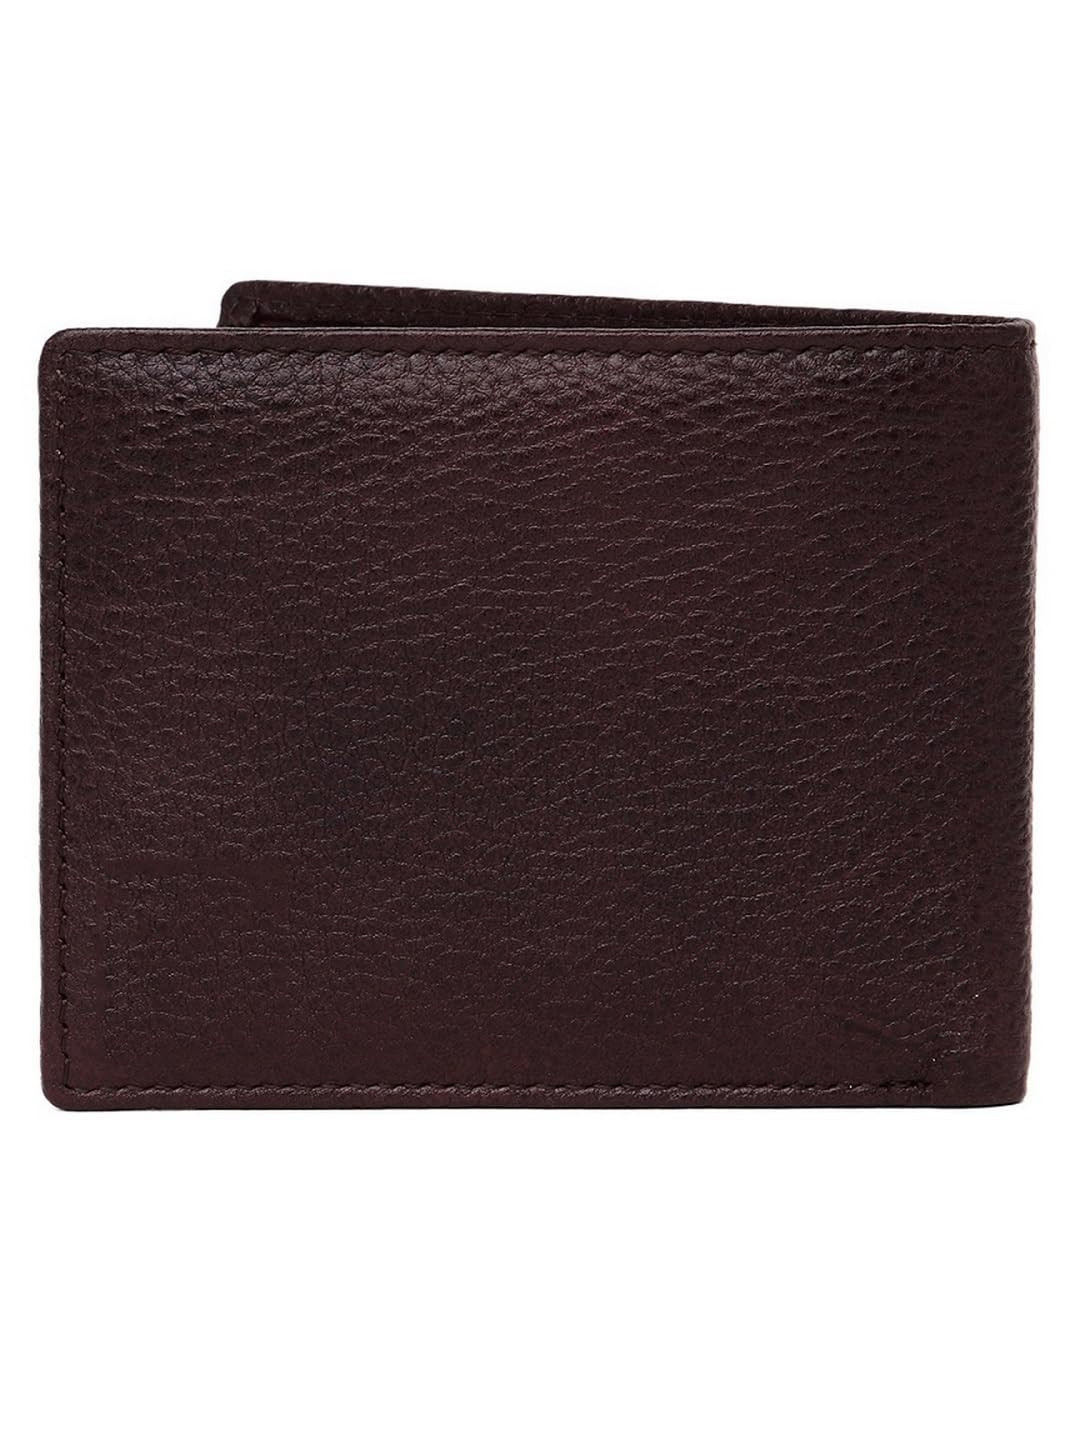 WildHorn Leather Wallet Giftset for Men & Women